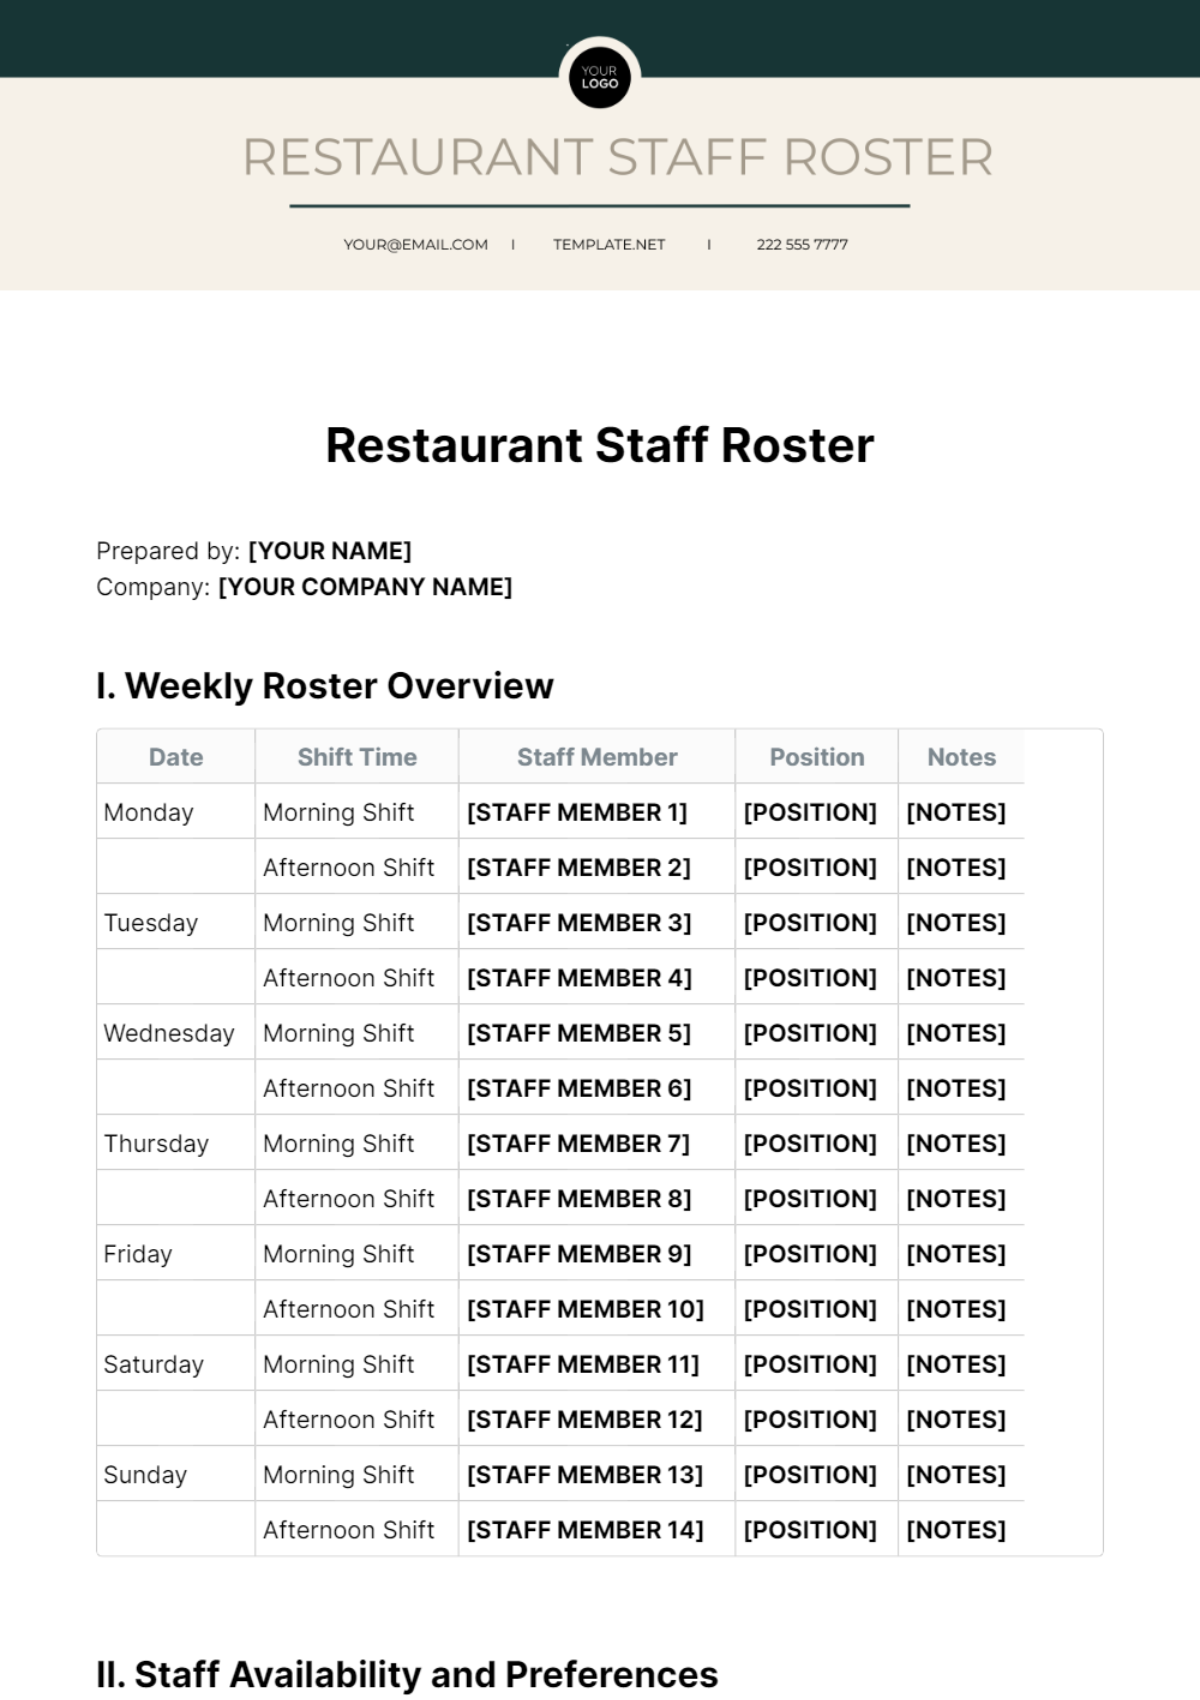 Restaurant Staff Roster Template